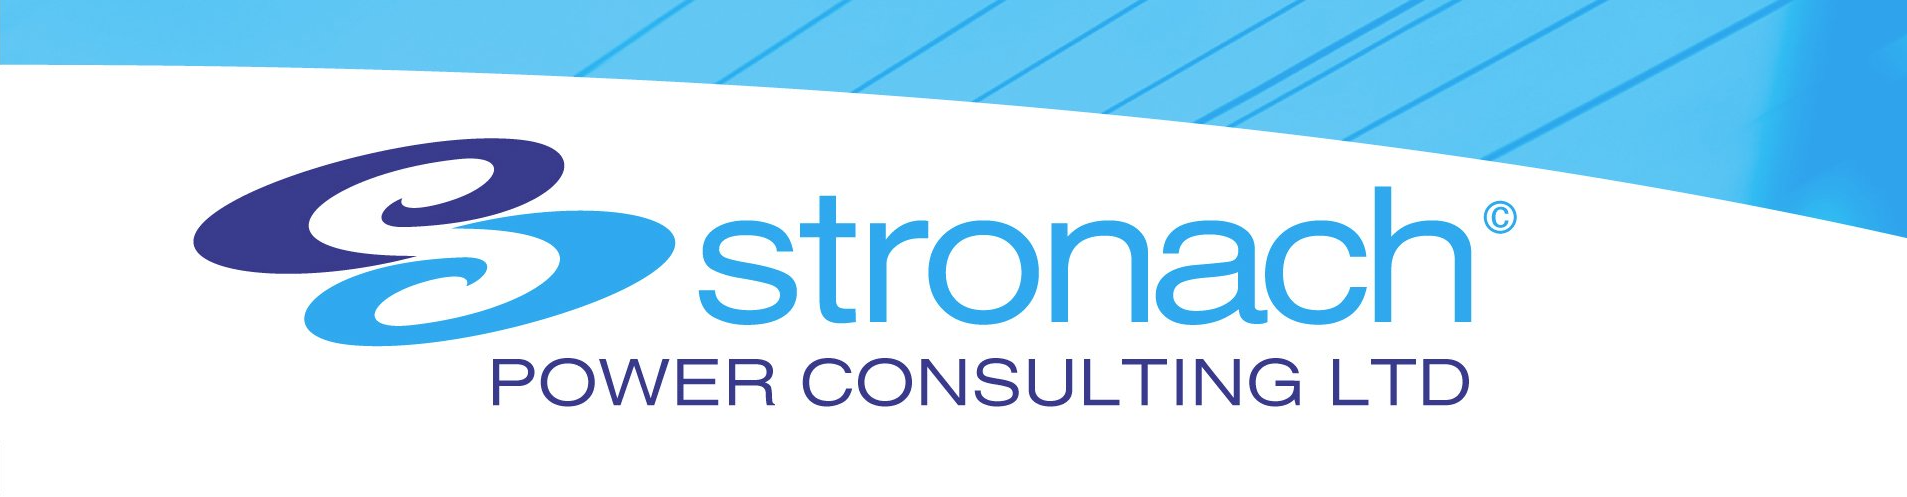 Stronach Power Consulting Ltd logo